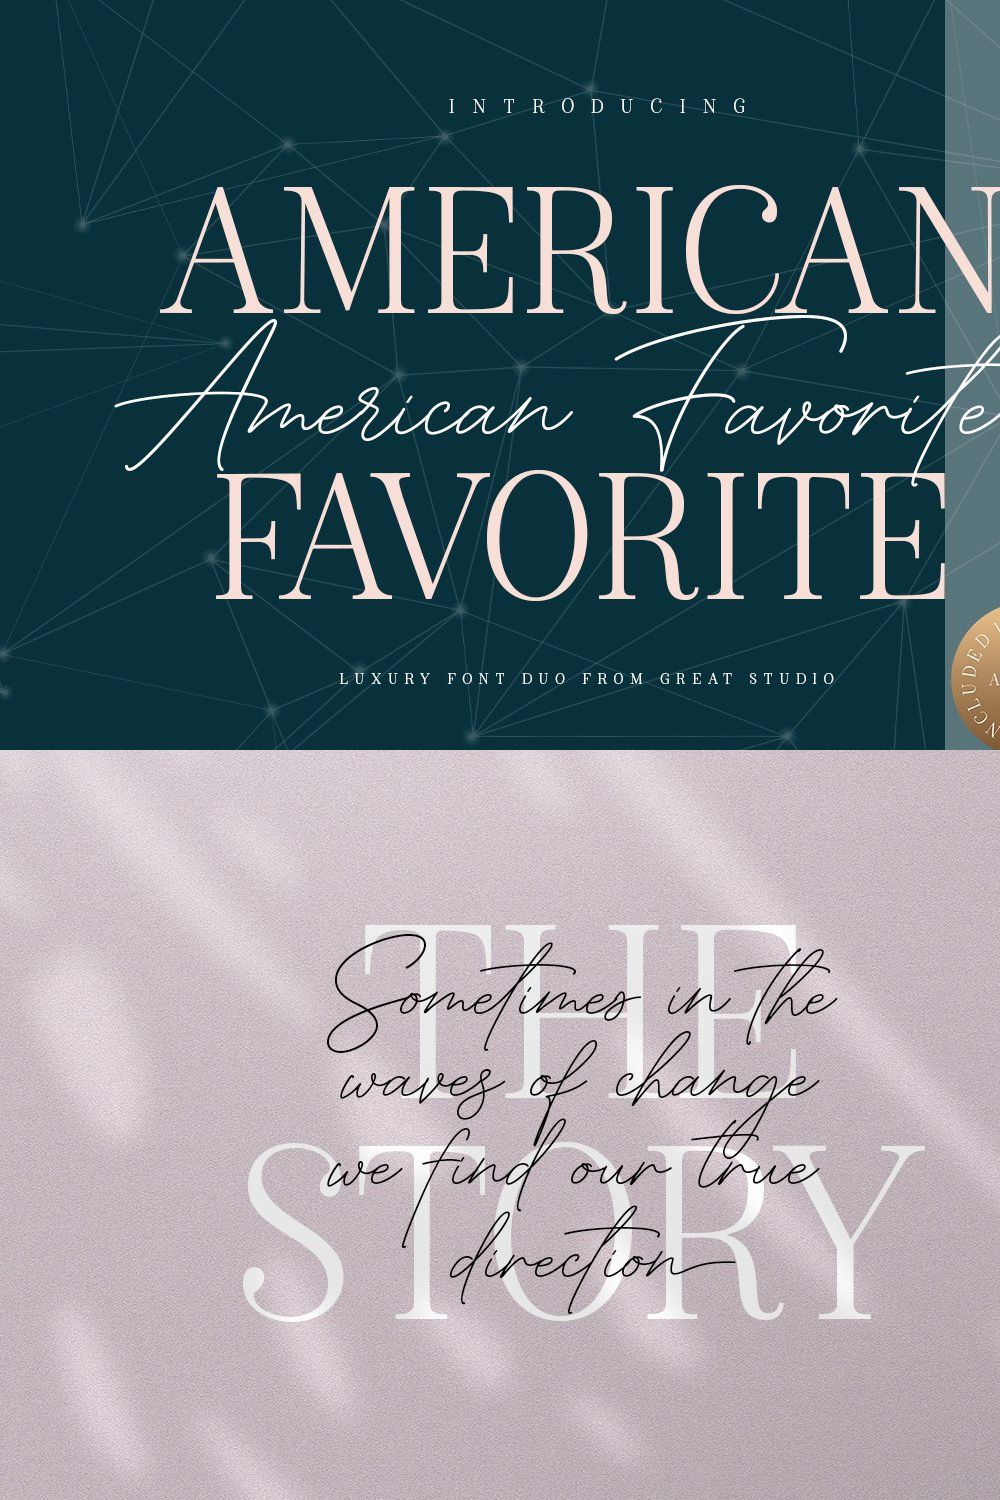 American Favorite Font Duo + Logo pinterest preview image.